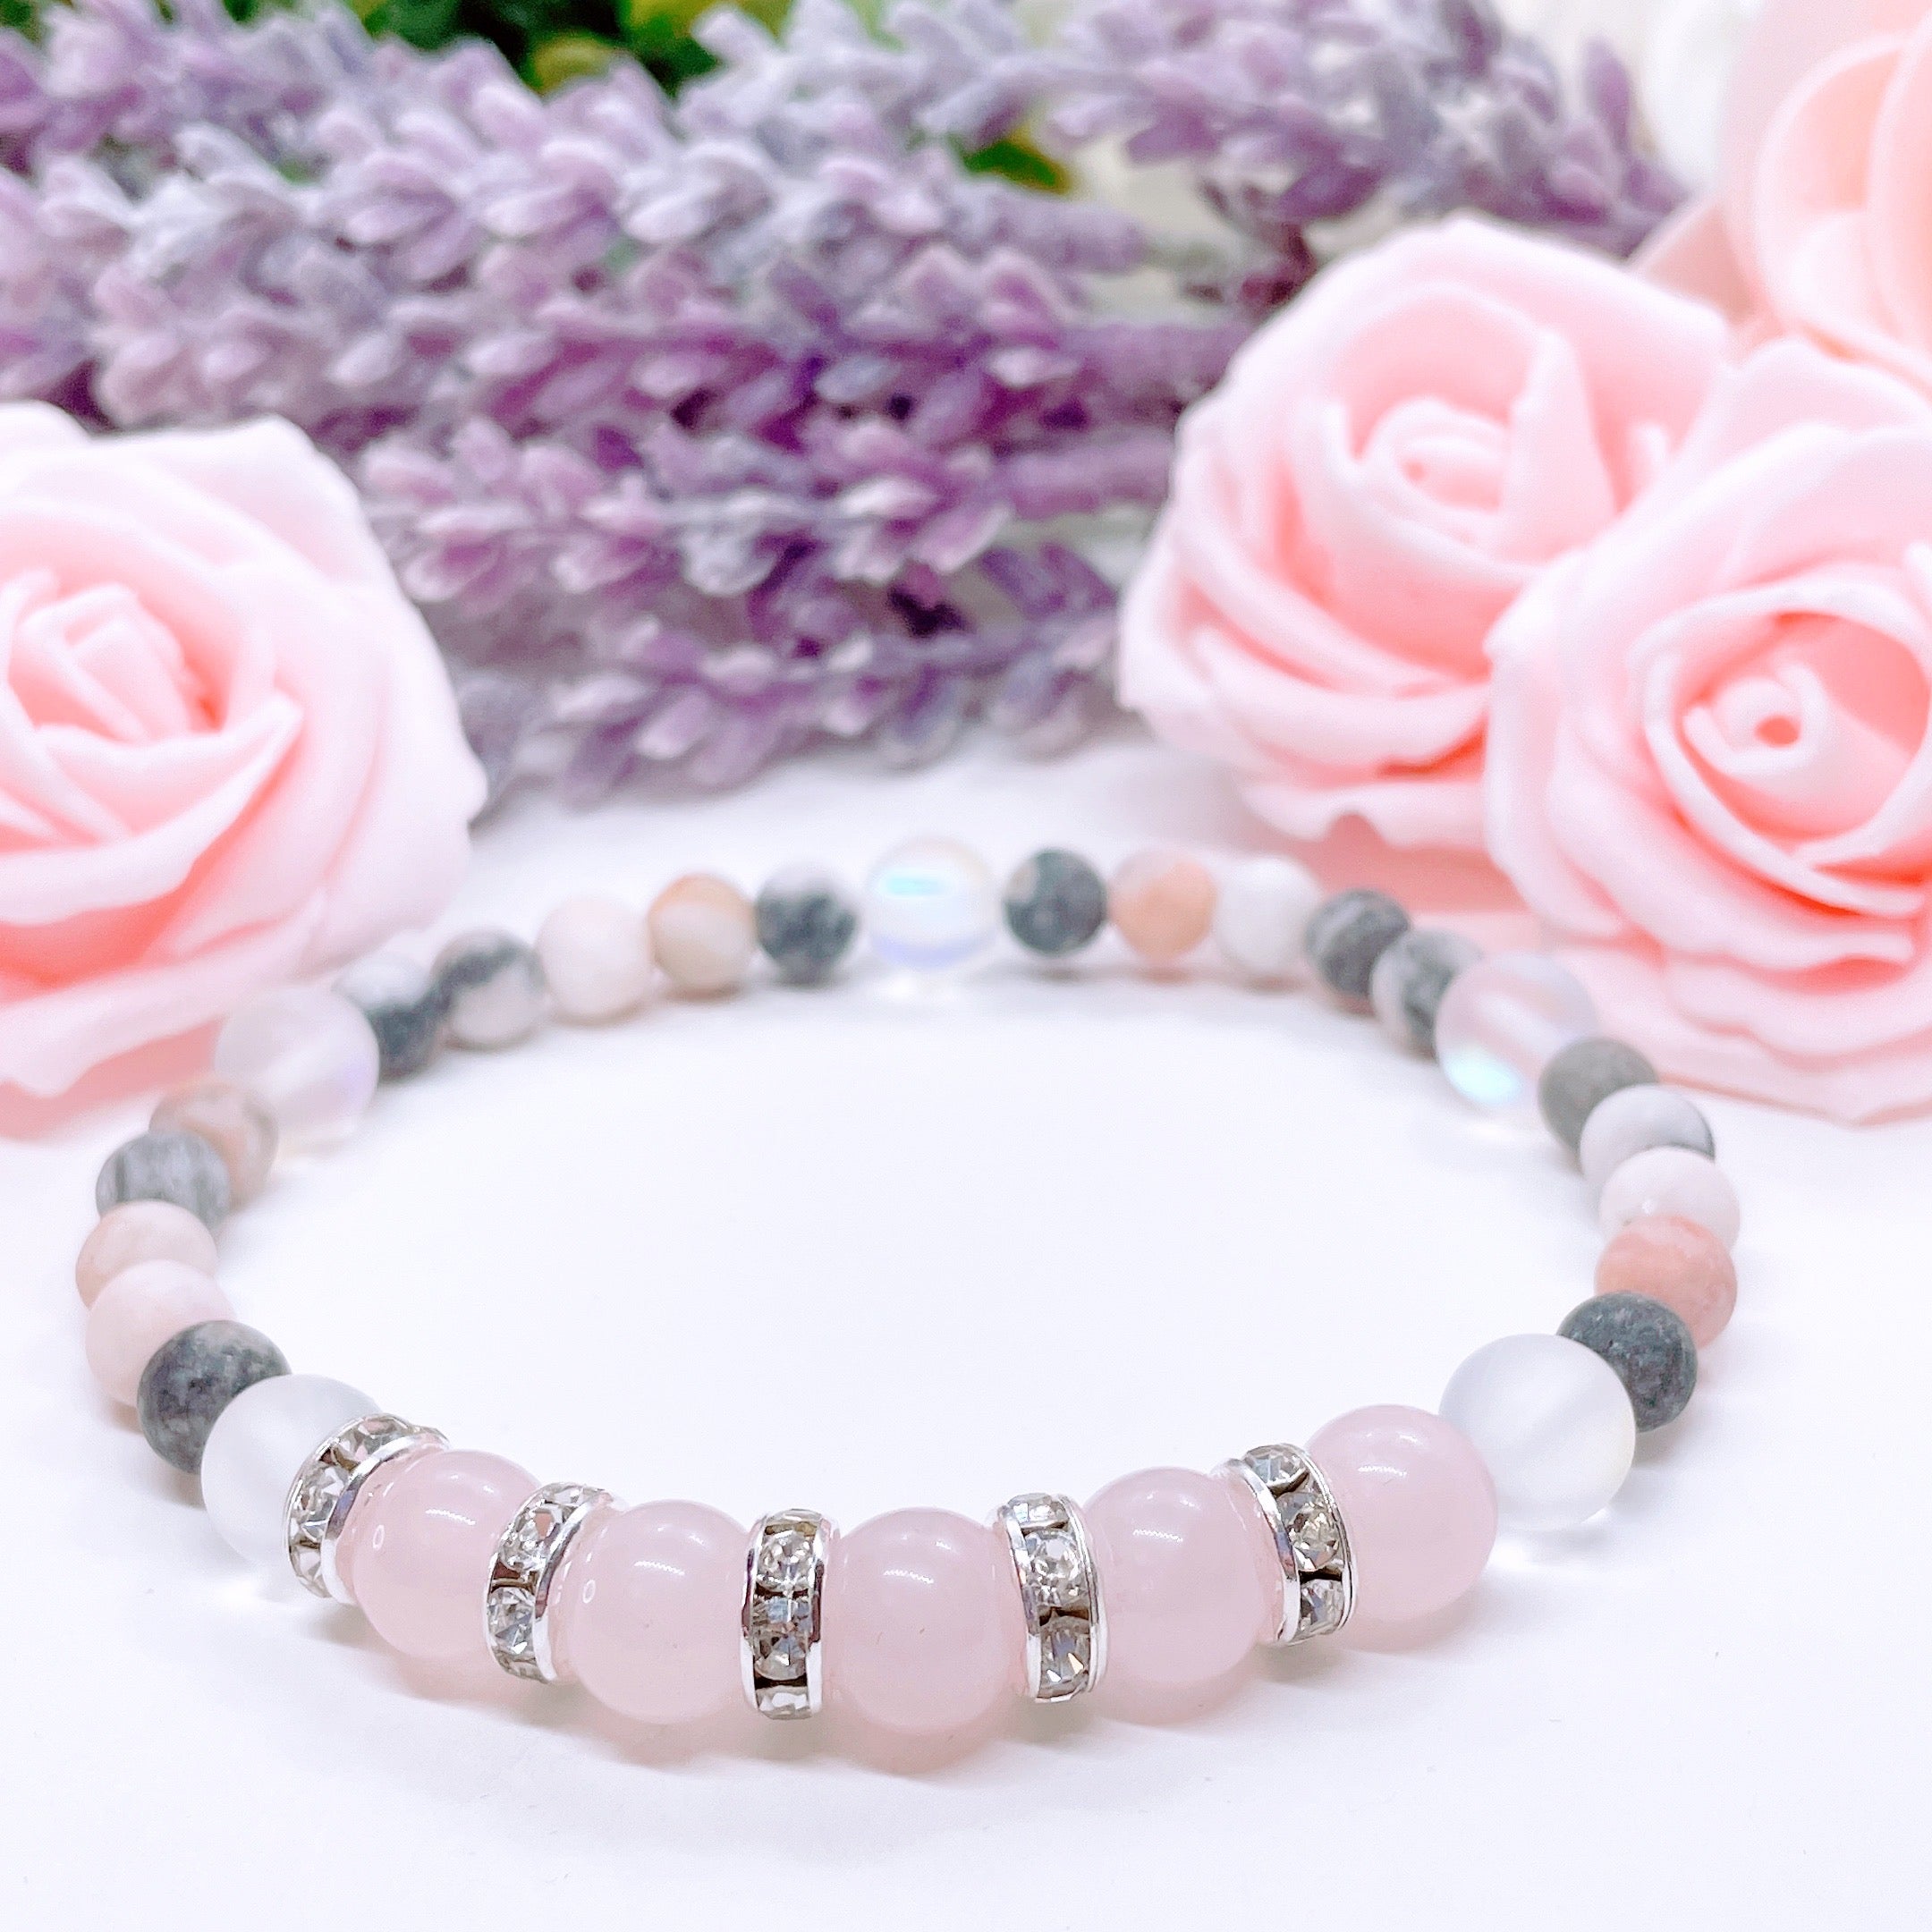 A Rose Quartz Rhinestone Companion Gemstone stretch bracelet made with 5 pink rose quartz gemstones, translucent aura beads, pink jasper gemstones, and rhinestone accents for added sparkle sits on a white table. 